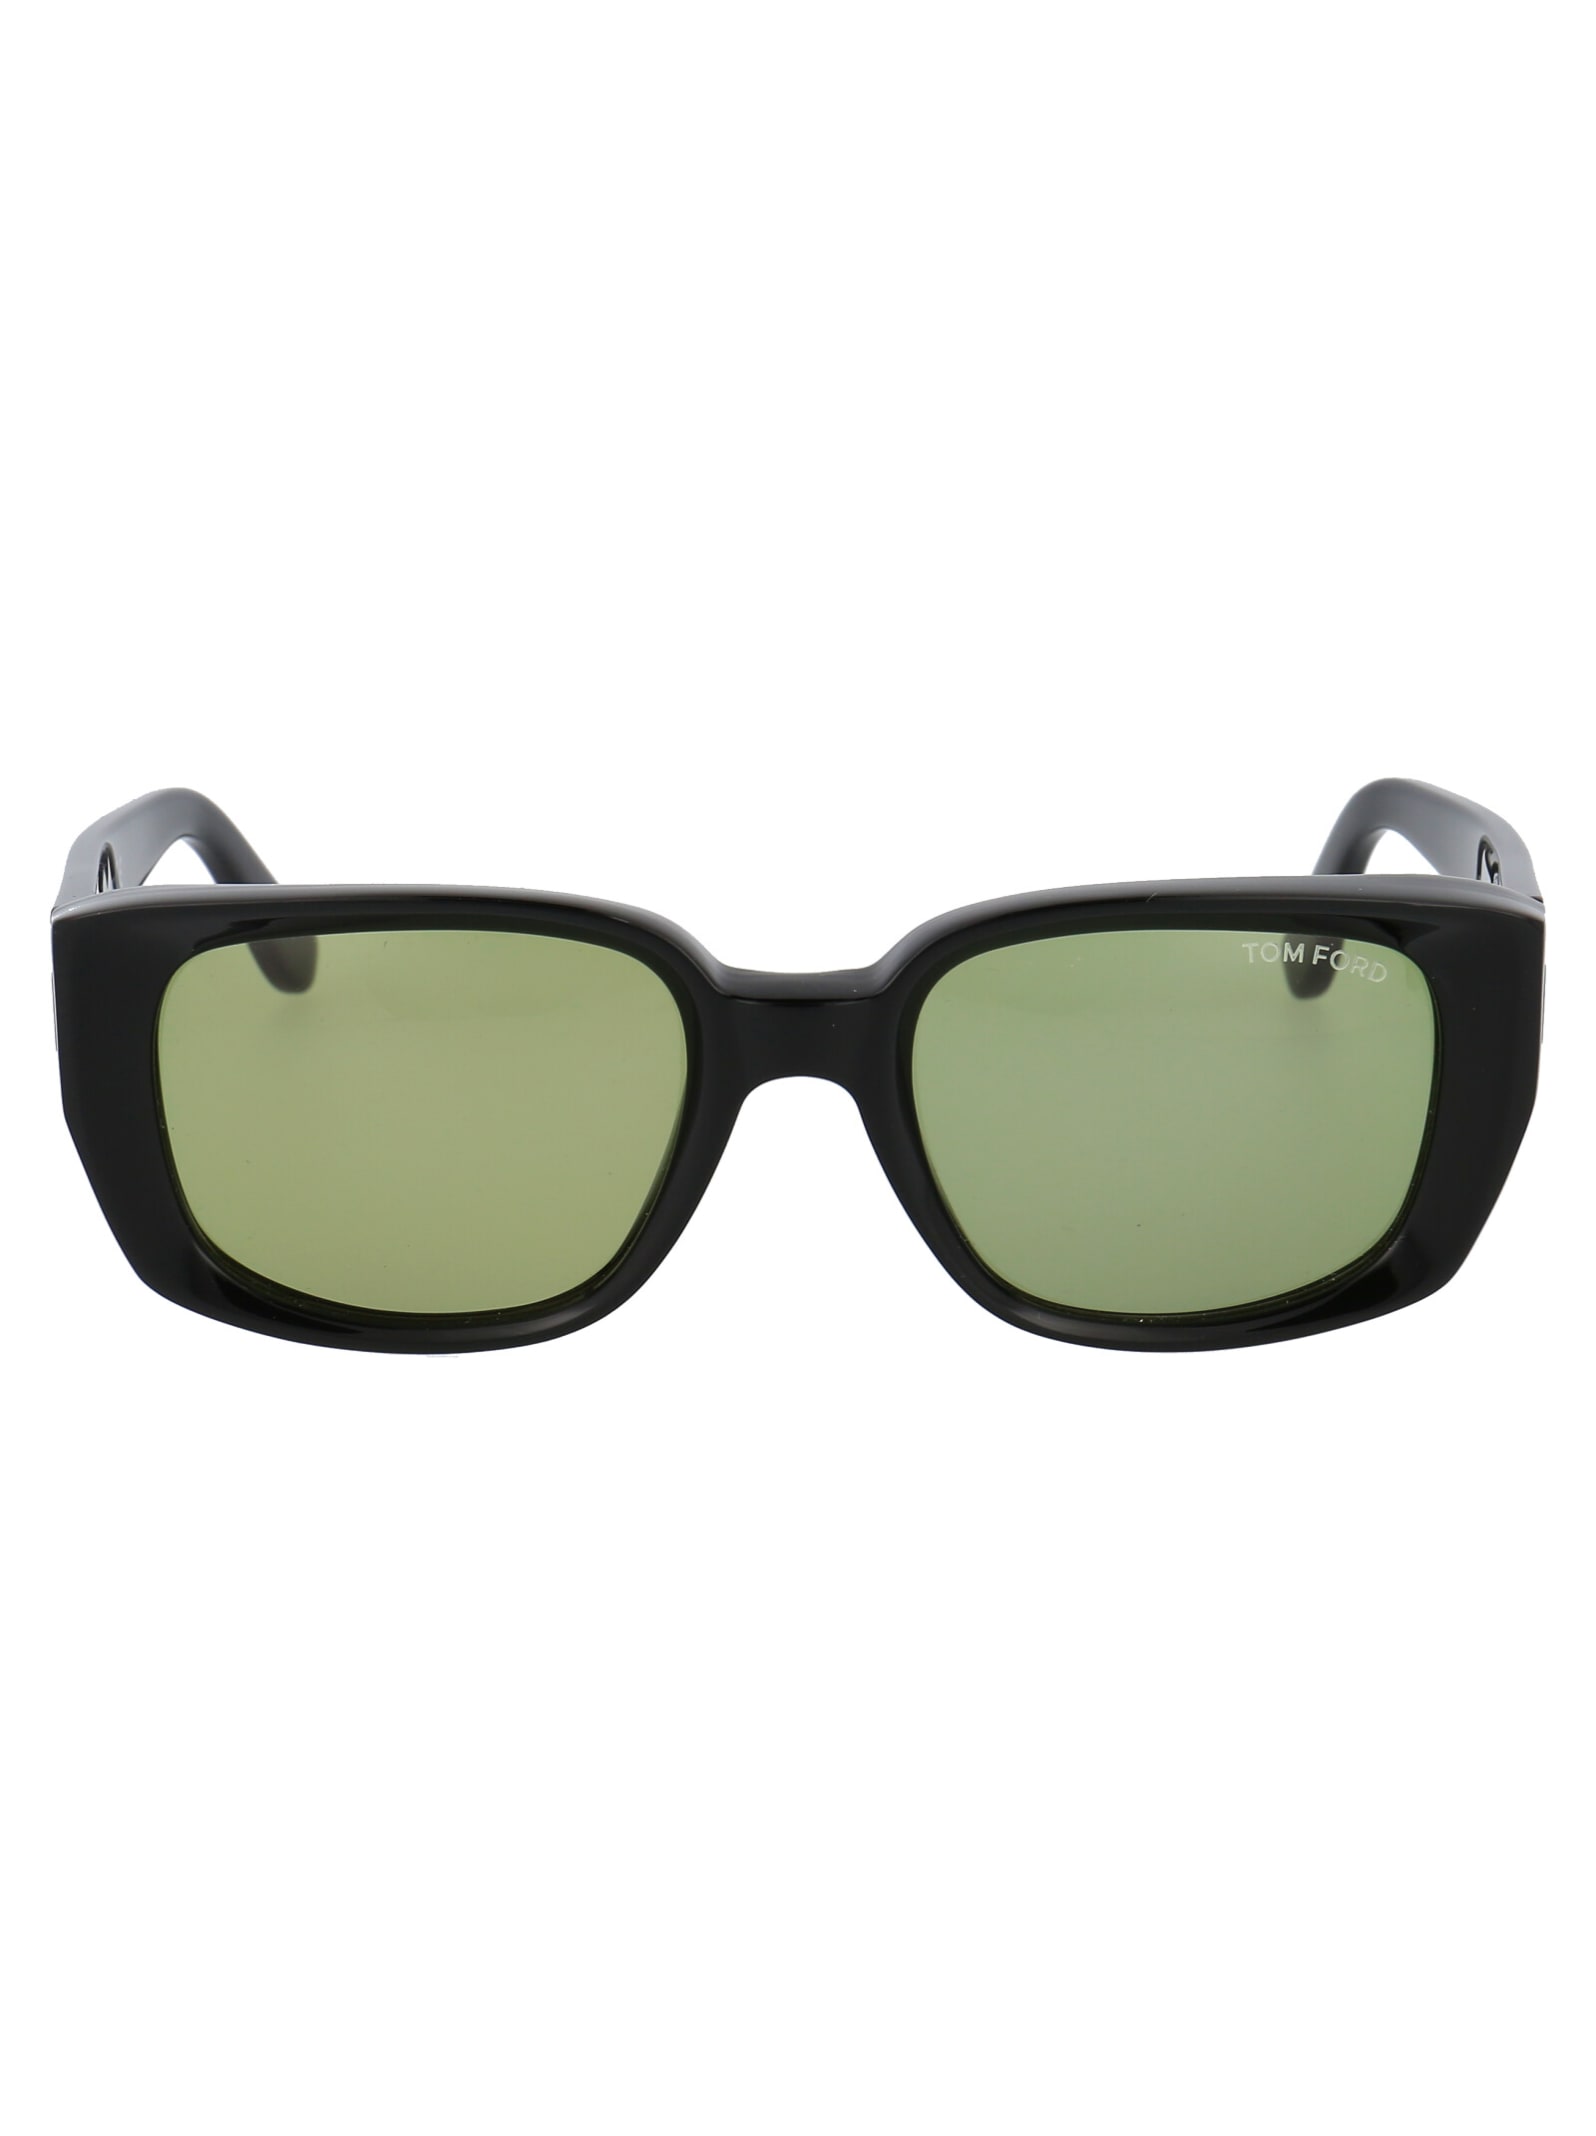 Tom Ford Eyewear Ft0492/s Sunglasses